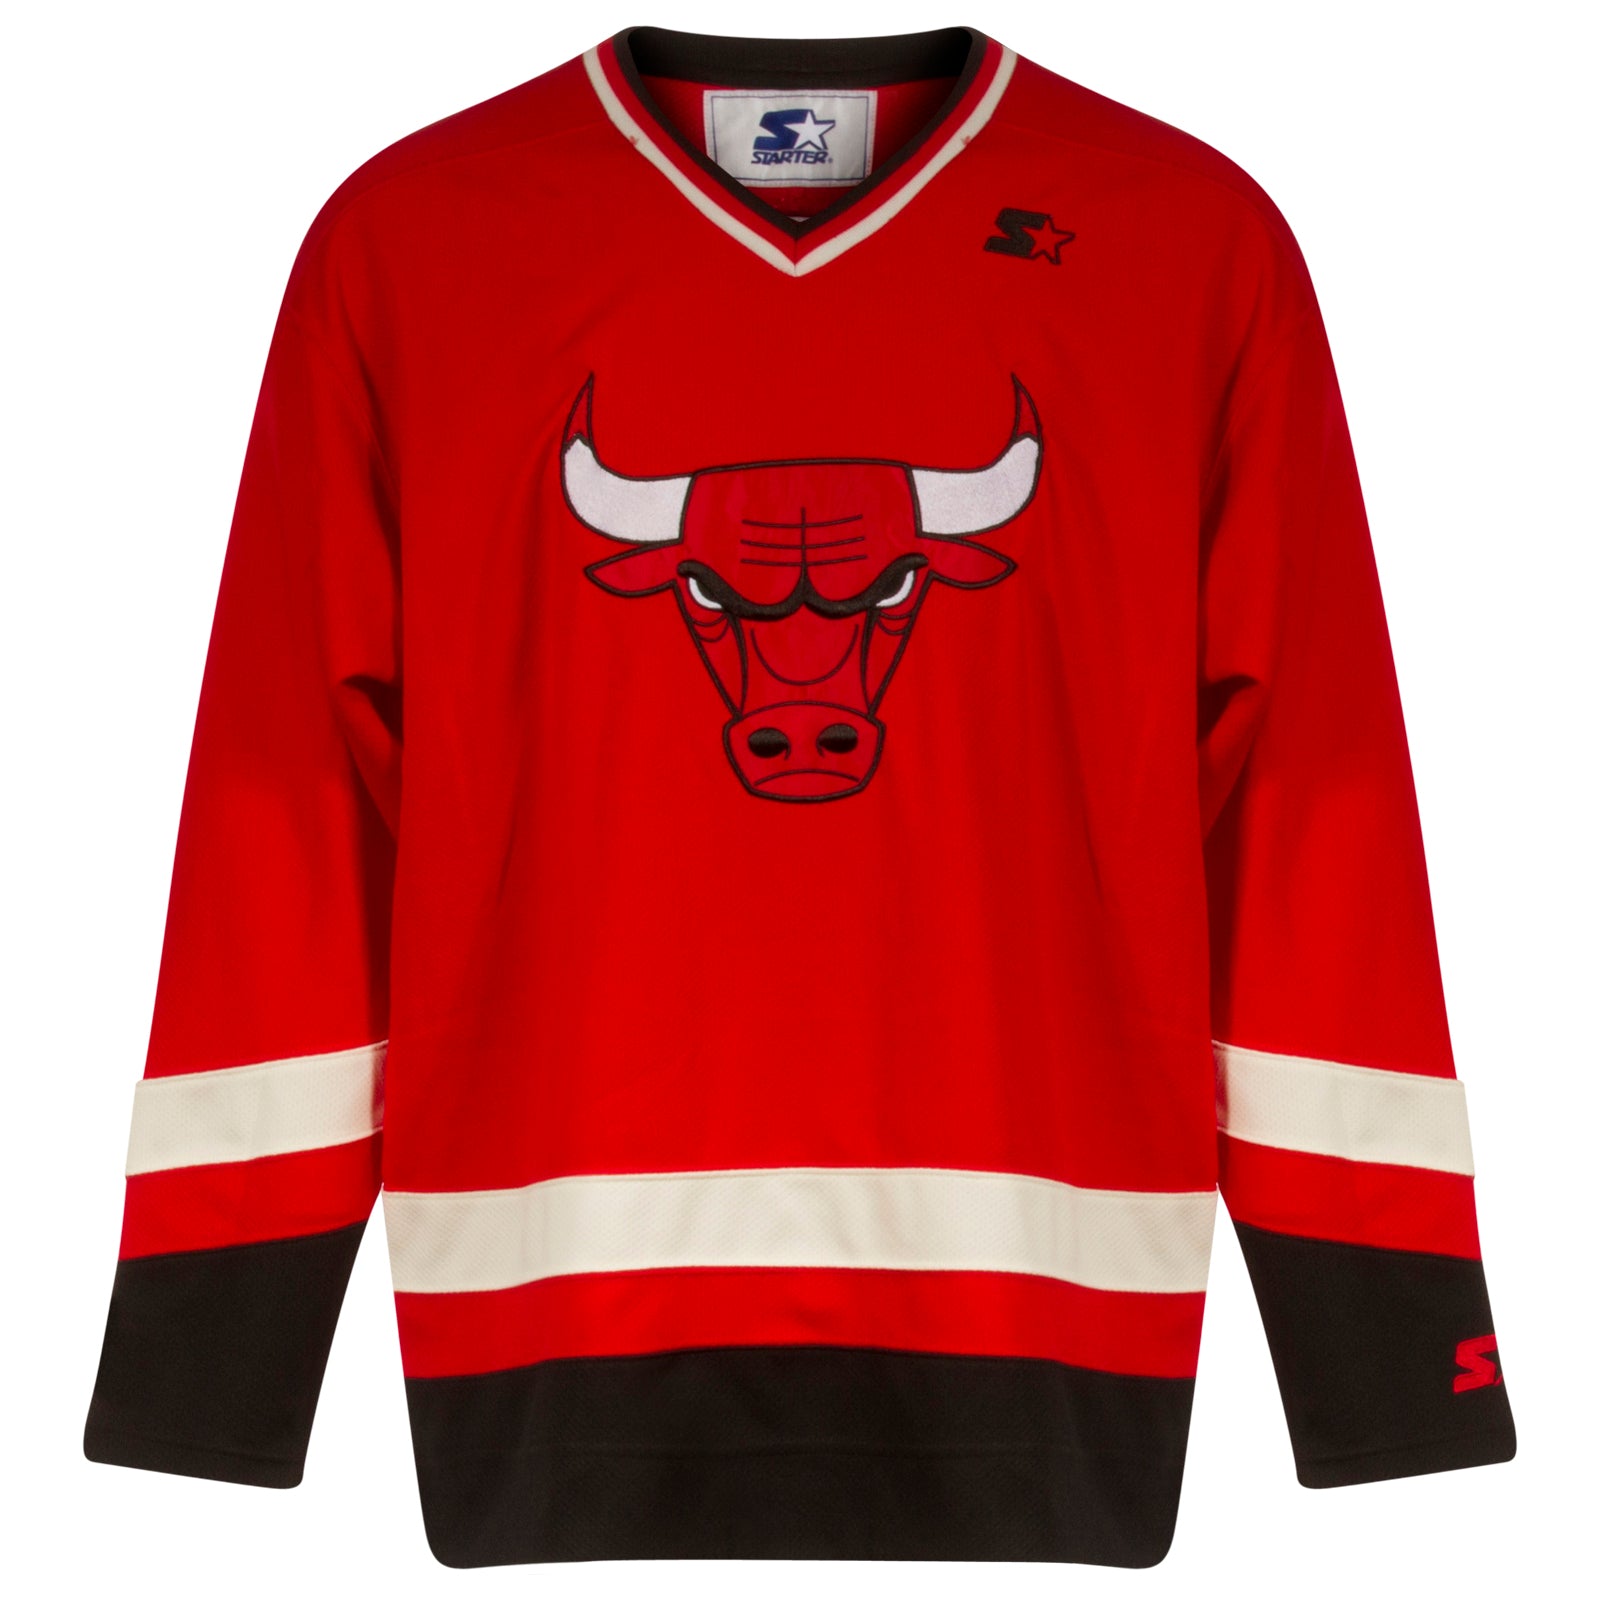 bulls jersey red